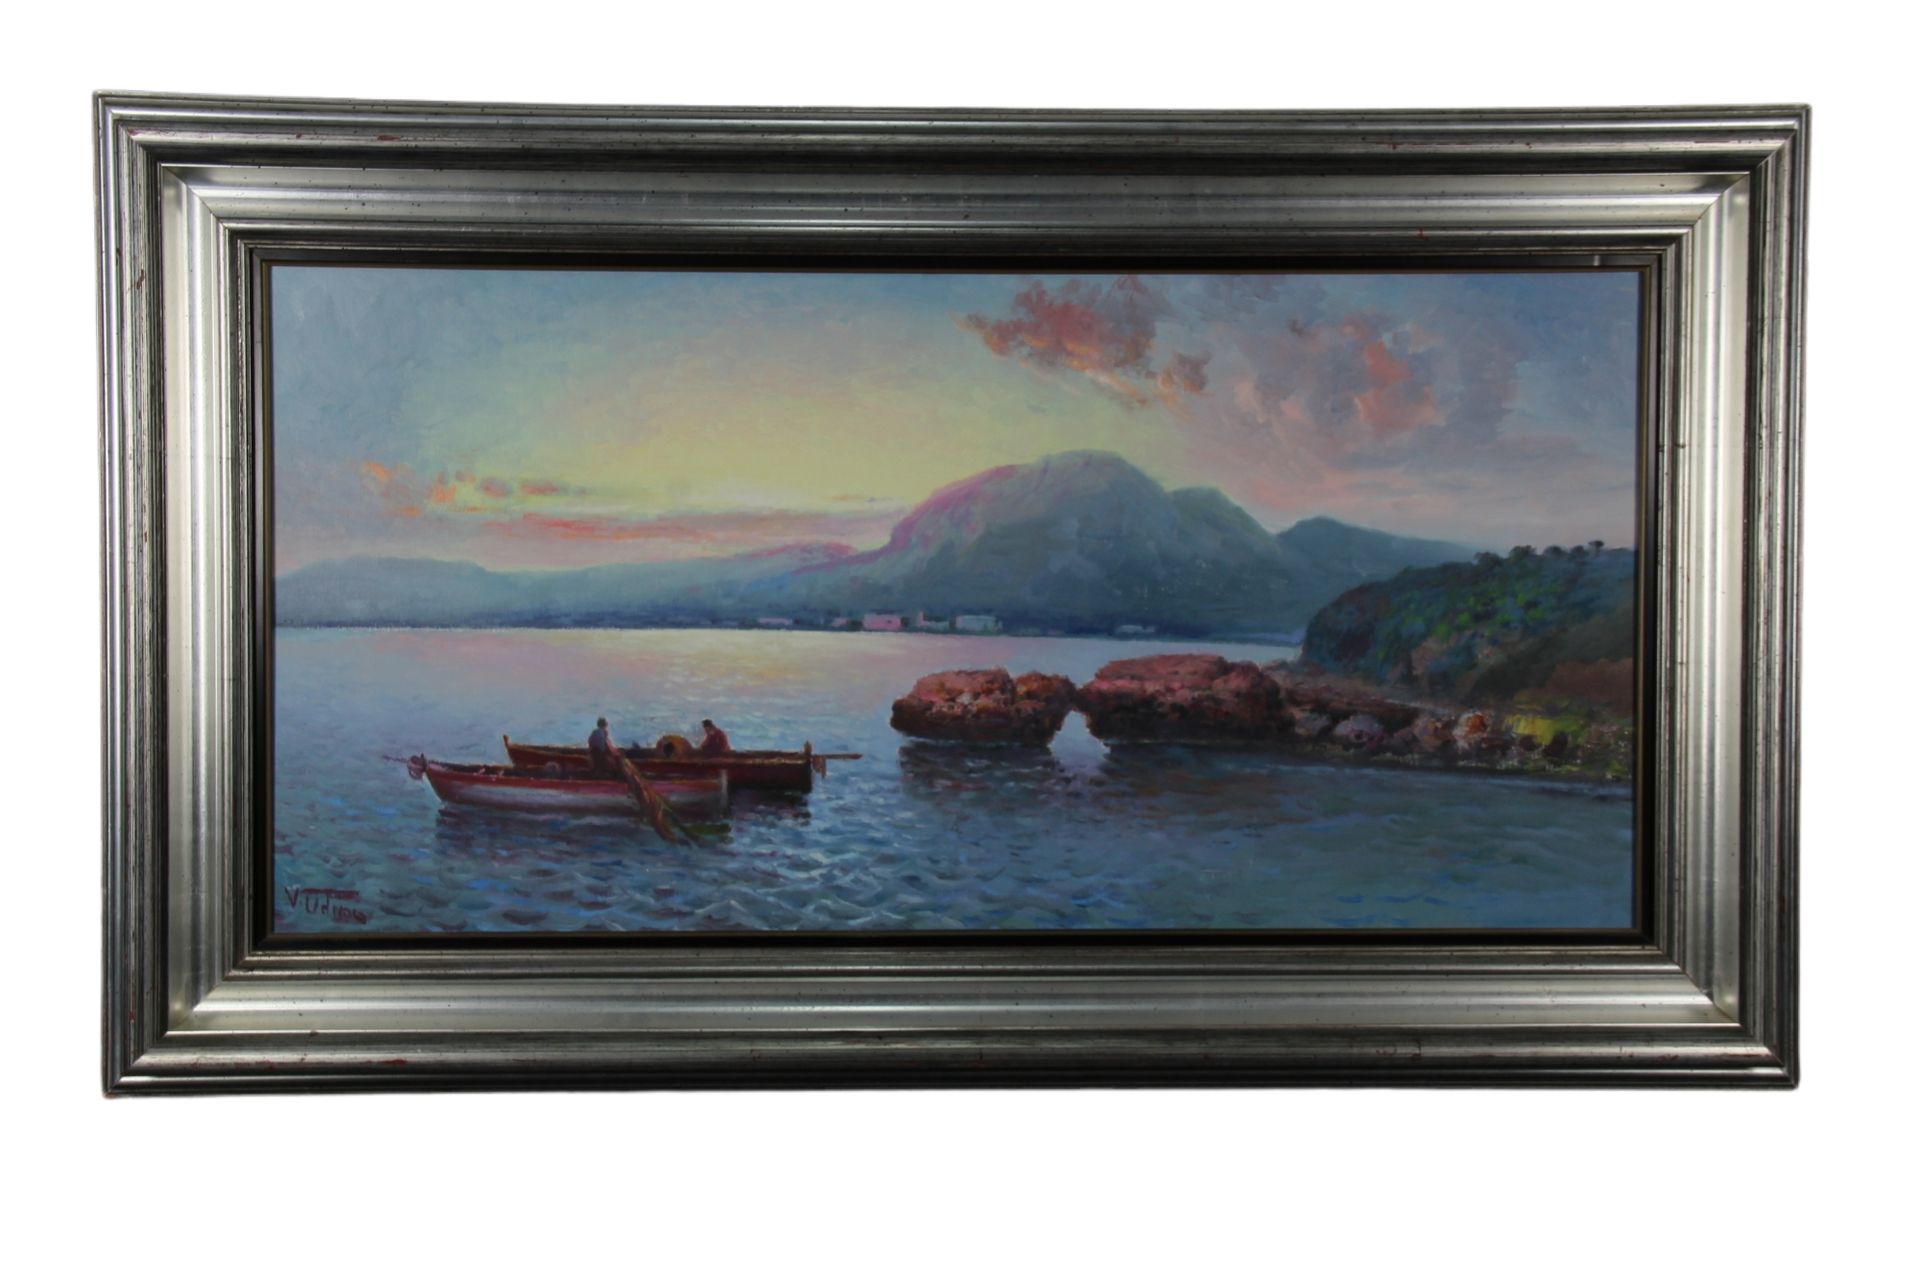 DIPINTO OLIO SU TELA Raff Marina with boats and fishermen at sunset, silver-plat&hellip;